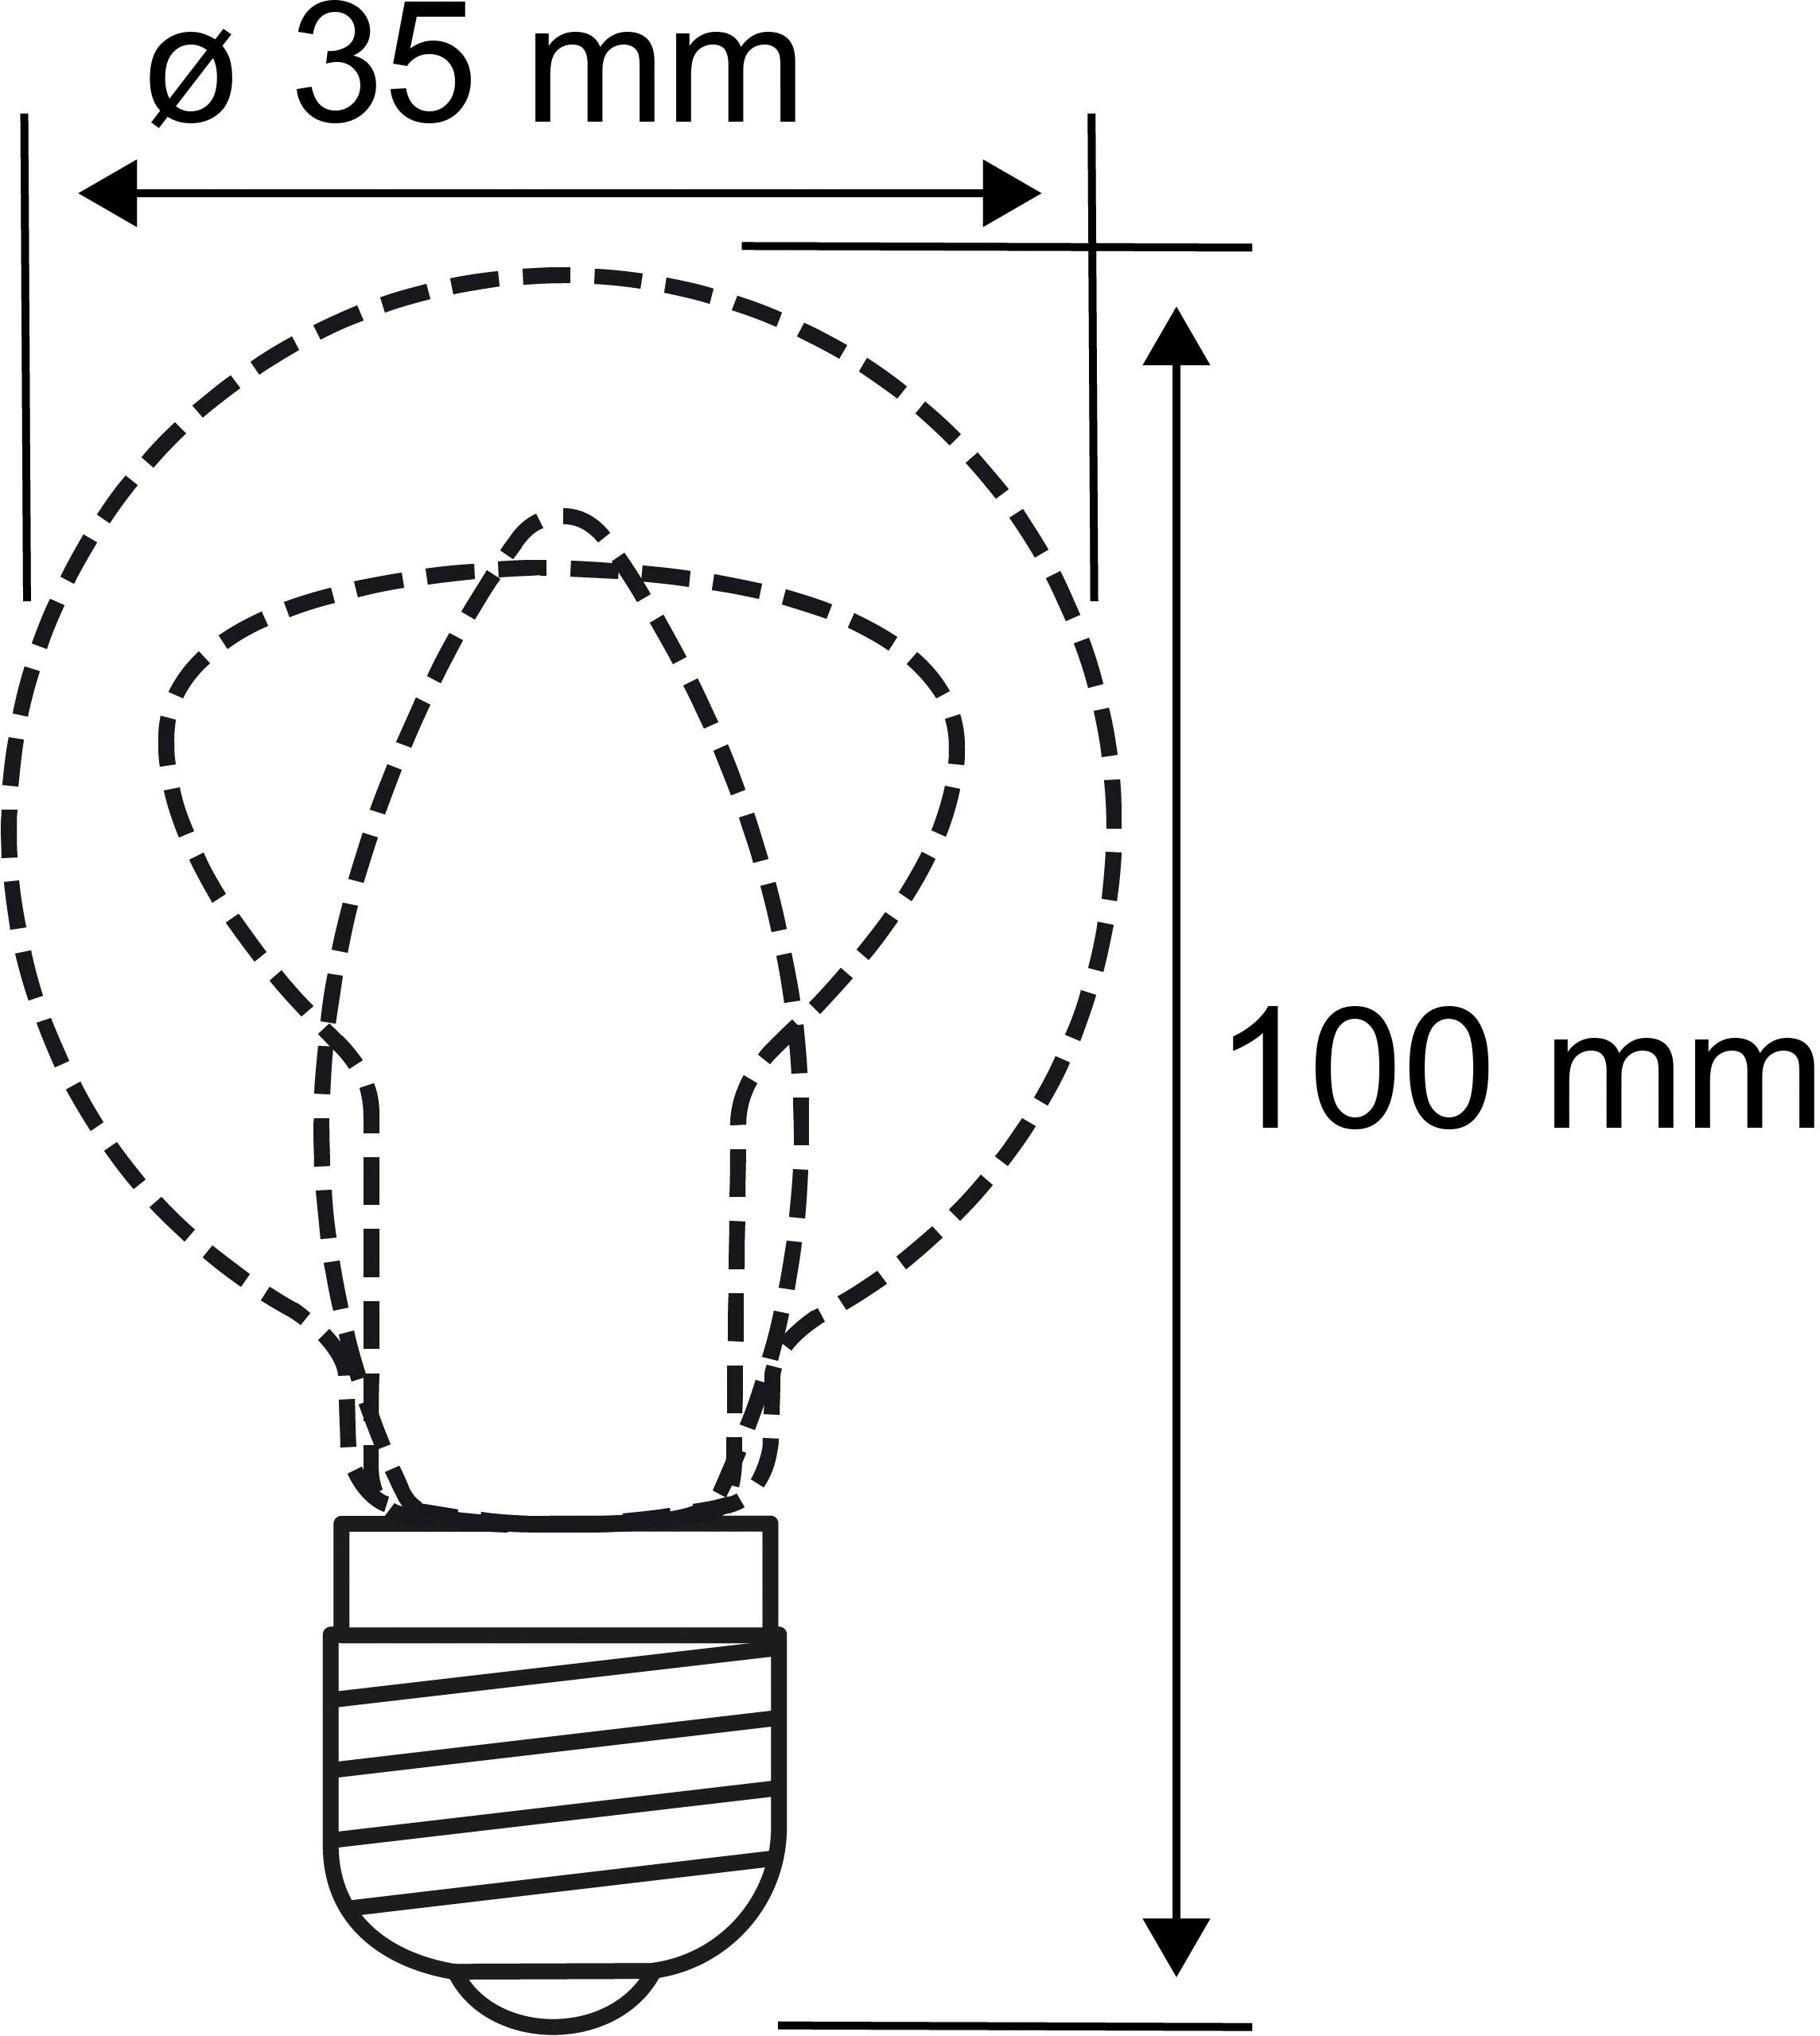 Paulmann LED-Leuchtmittel »Kerze 4W E14 230V Warmweiß 3er-Pack«, E14, 3 St., Warmweiß